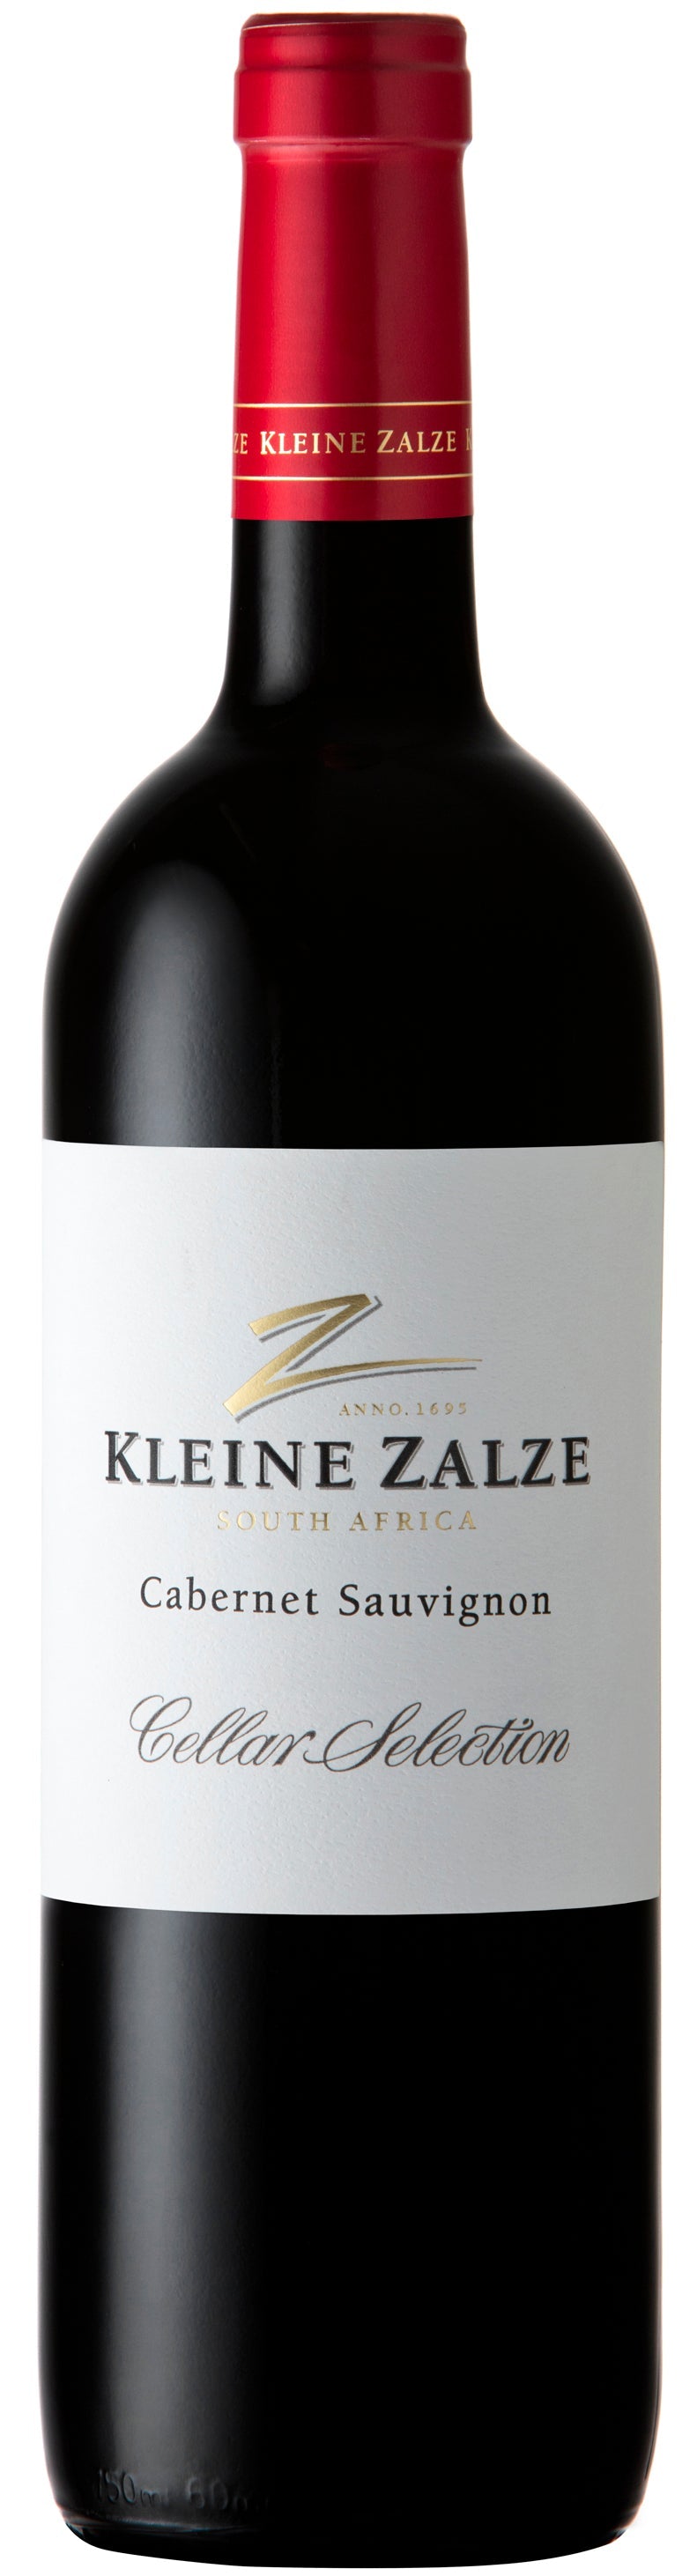 Kleine Zalze Cabernet Sauvignon Cellar Selection - 0,75 l